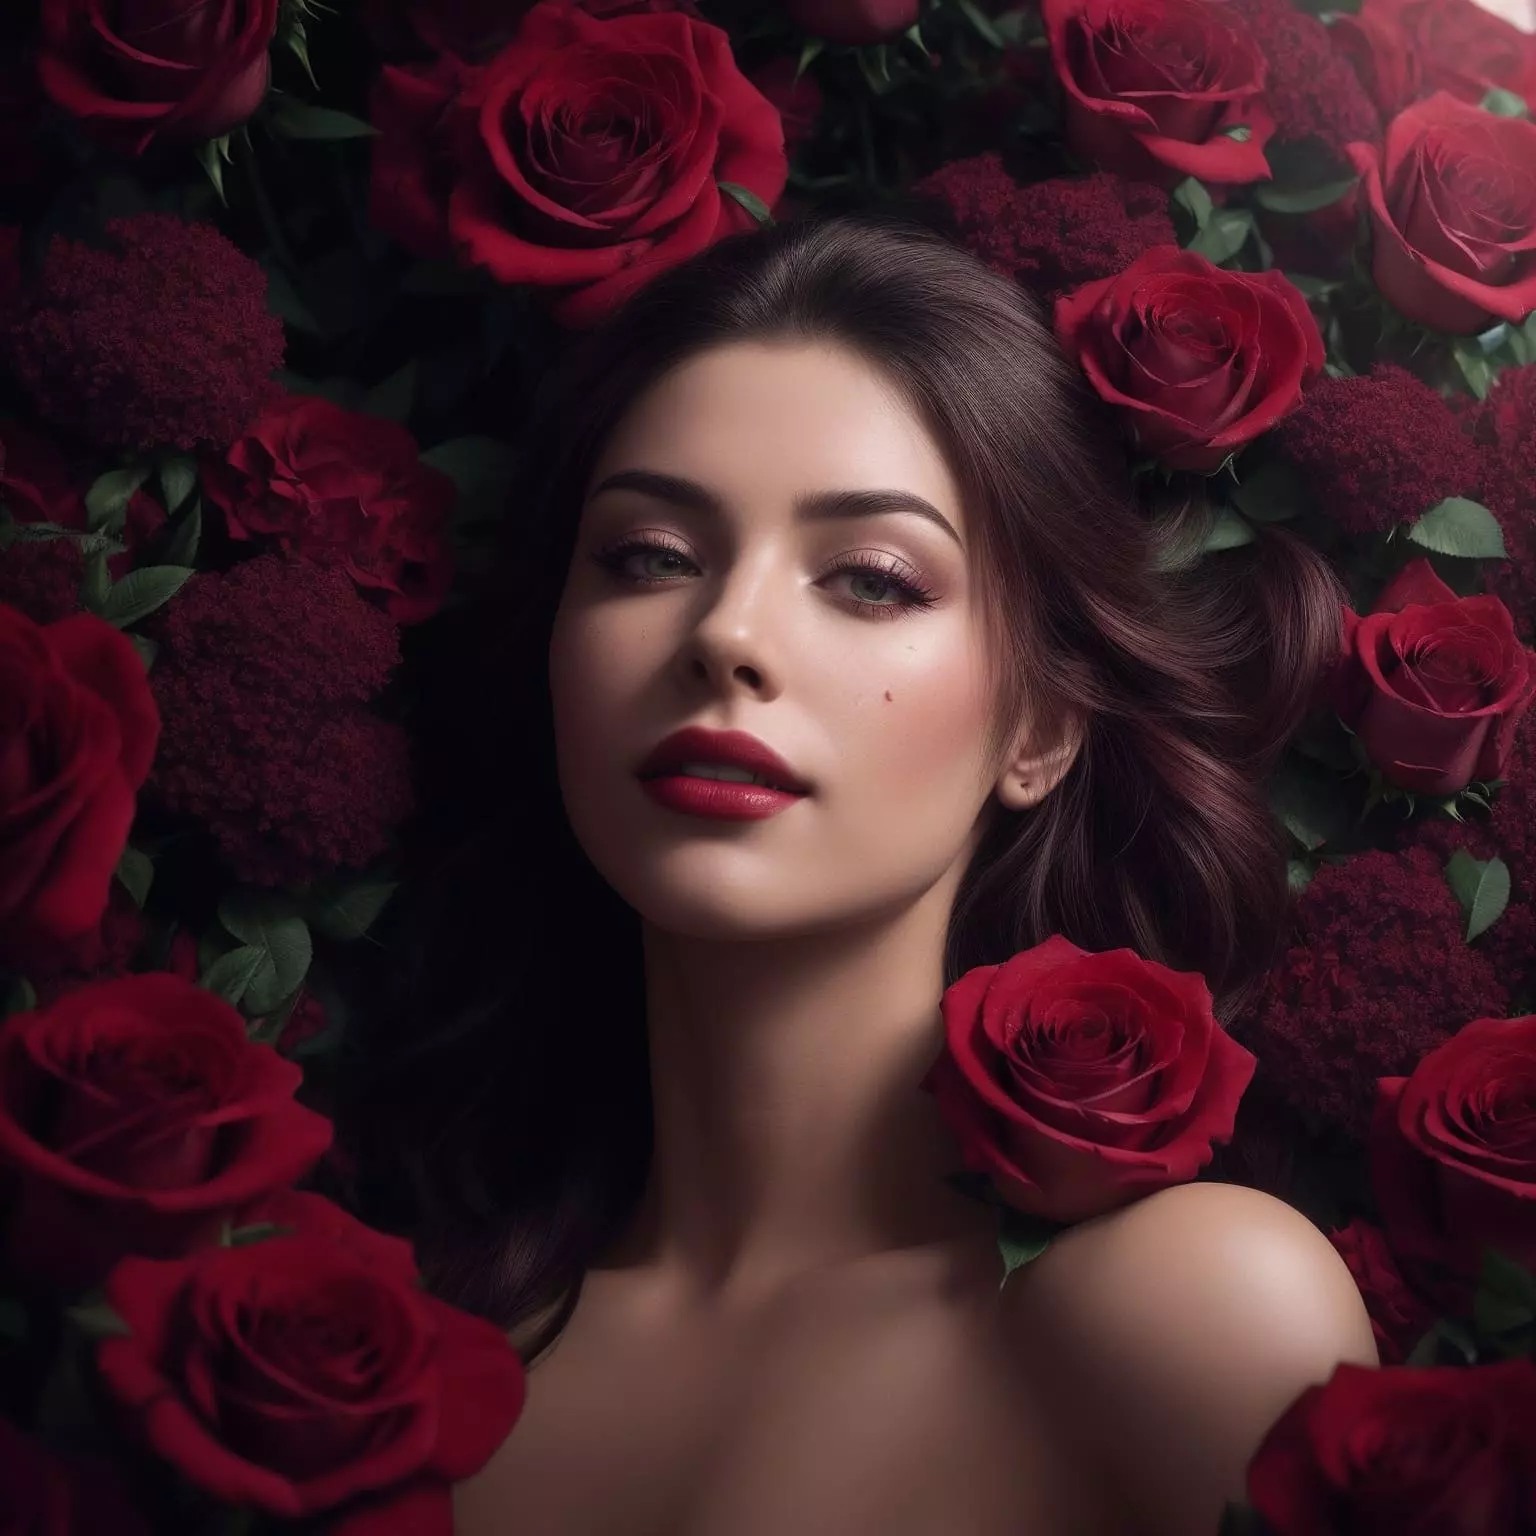 Mulher entre rosas